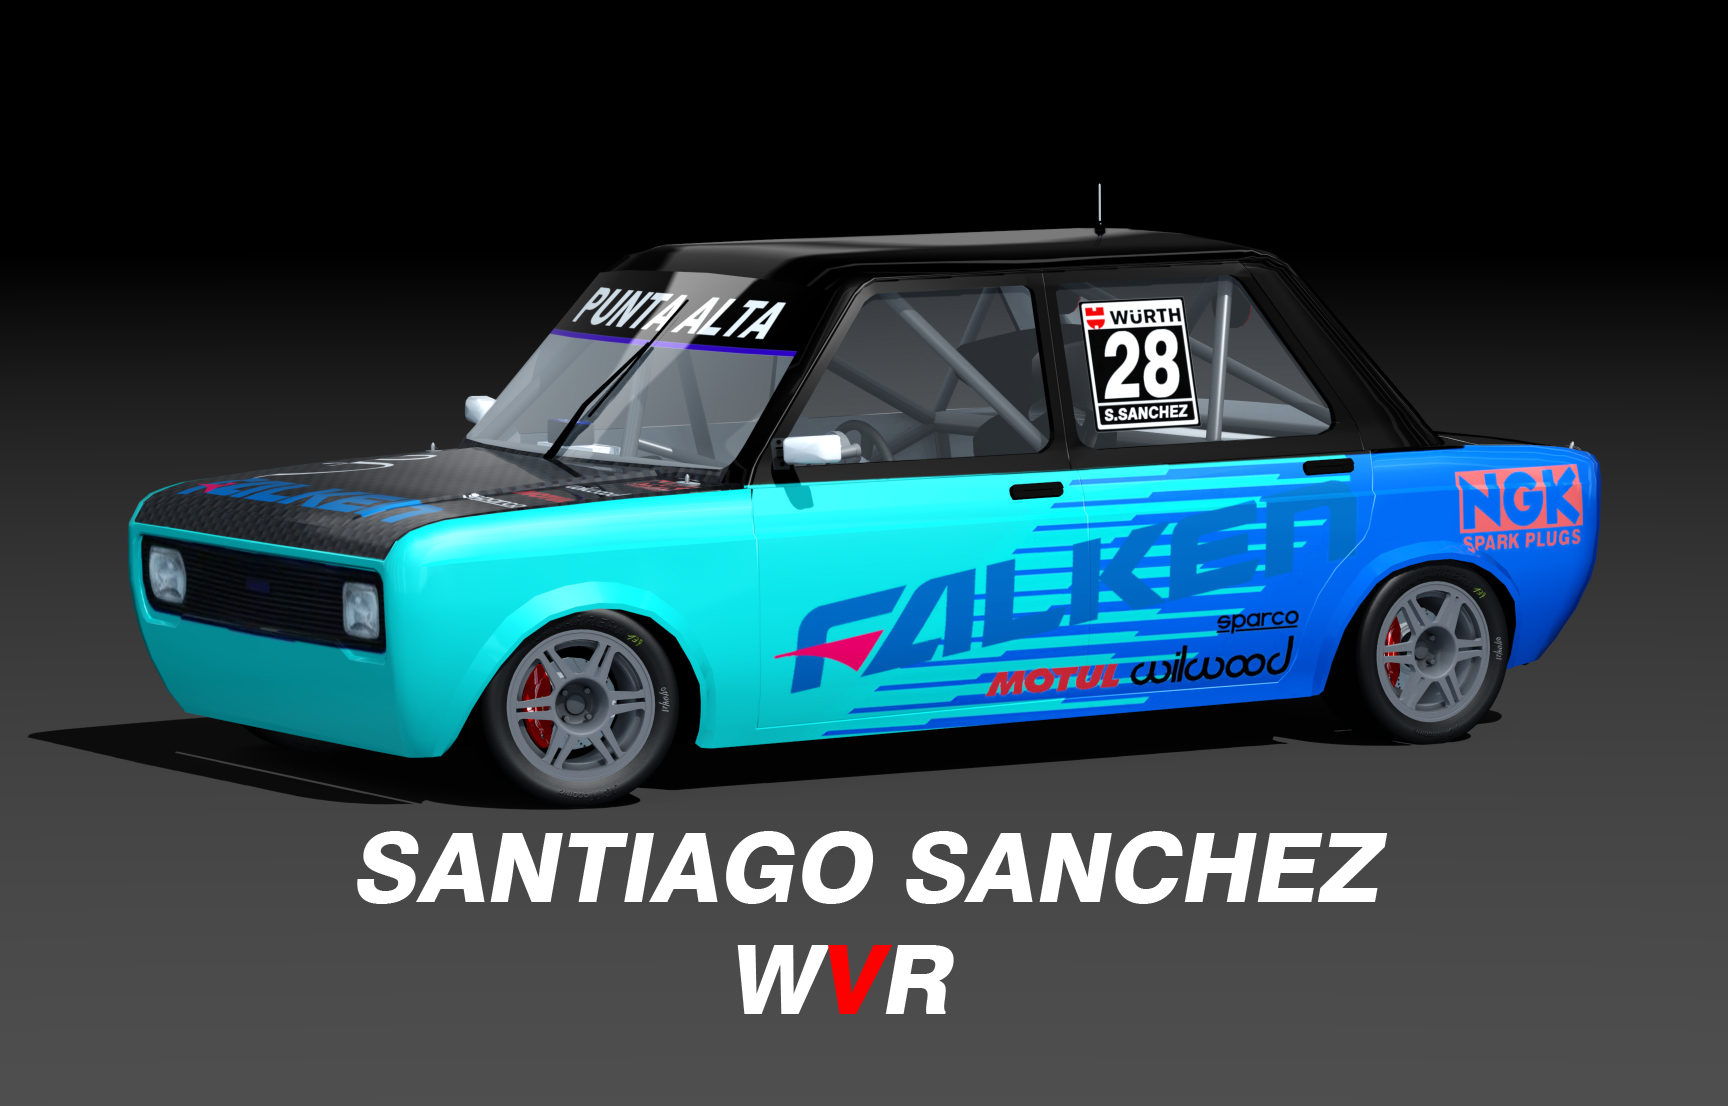 WVR Turismo 1.4 FIAT 128, skin santiago sanchez